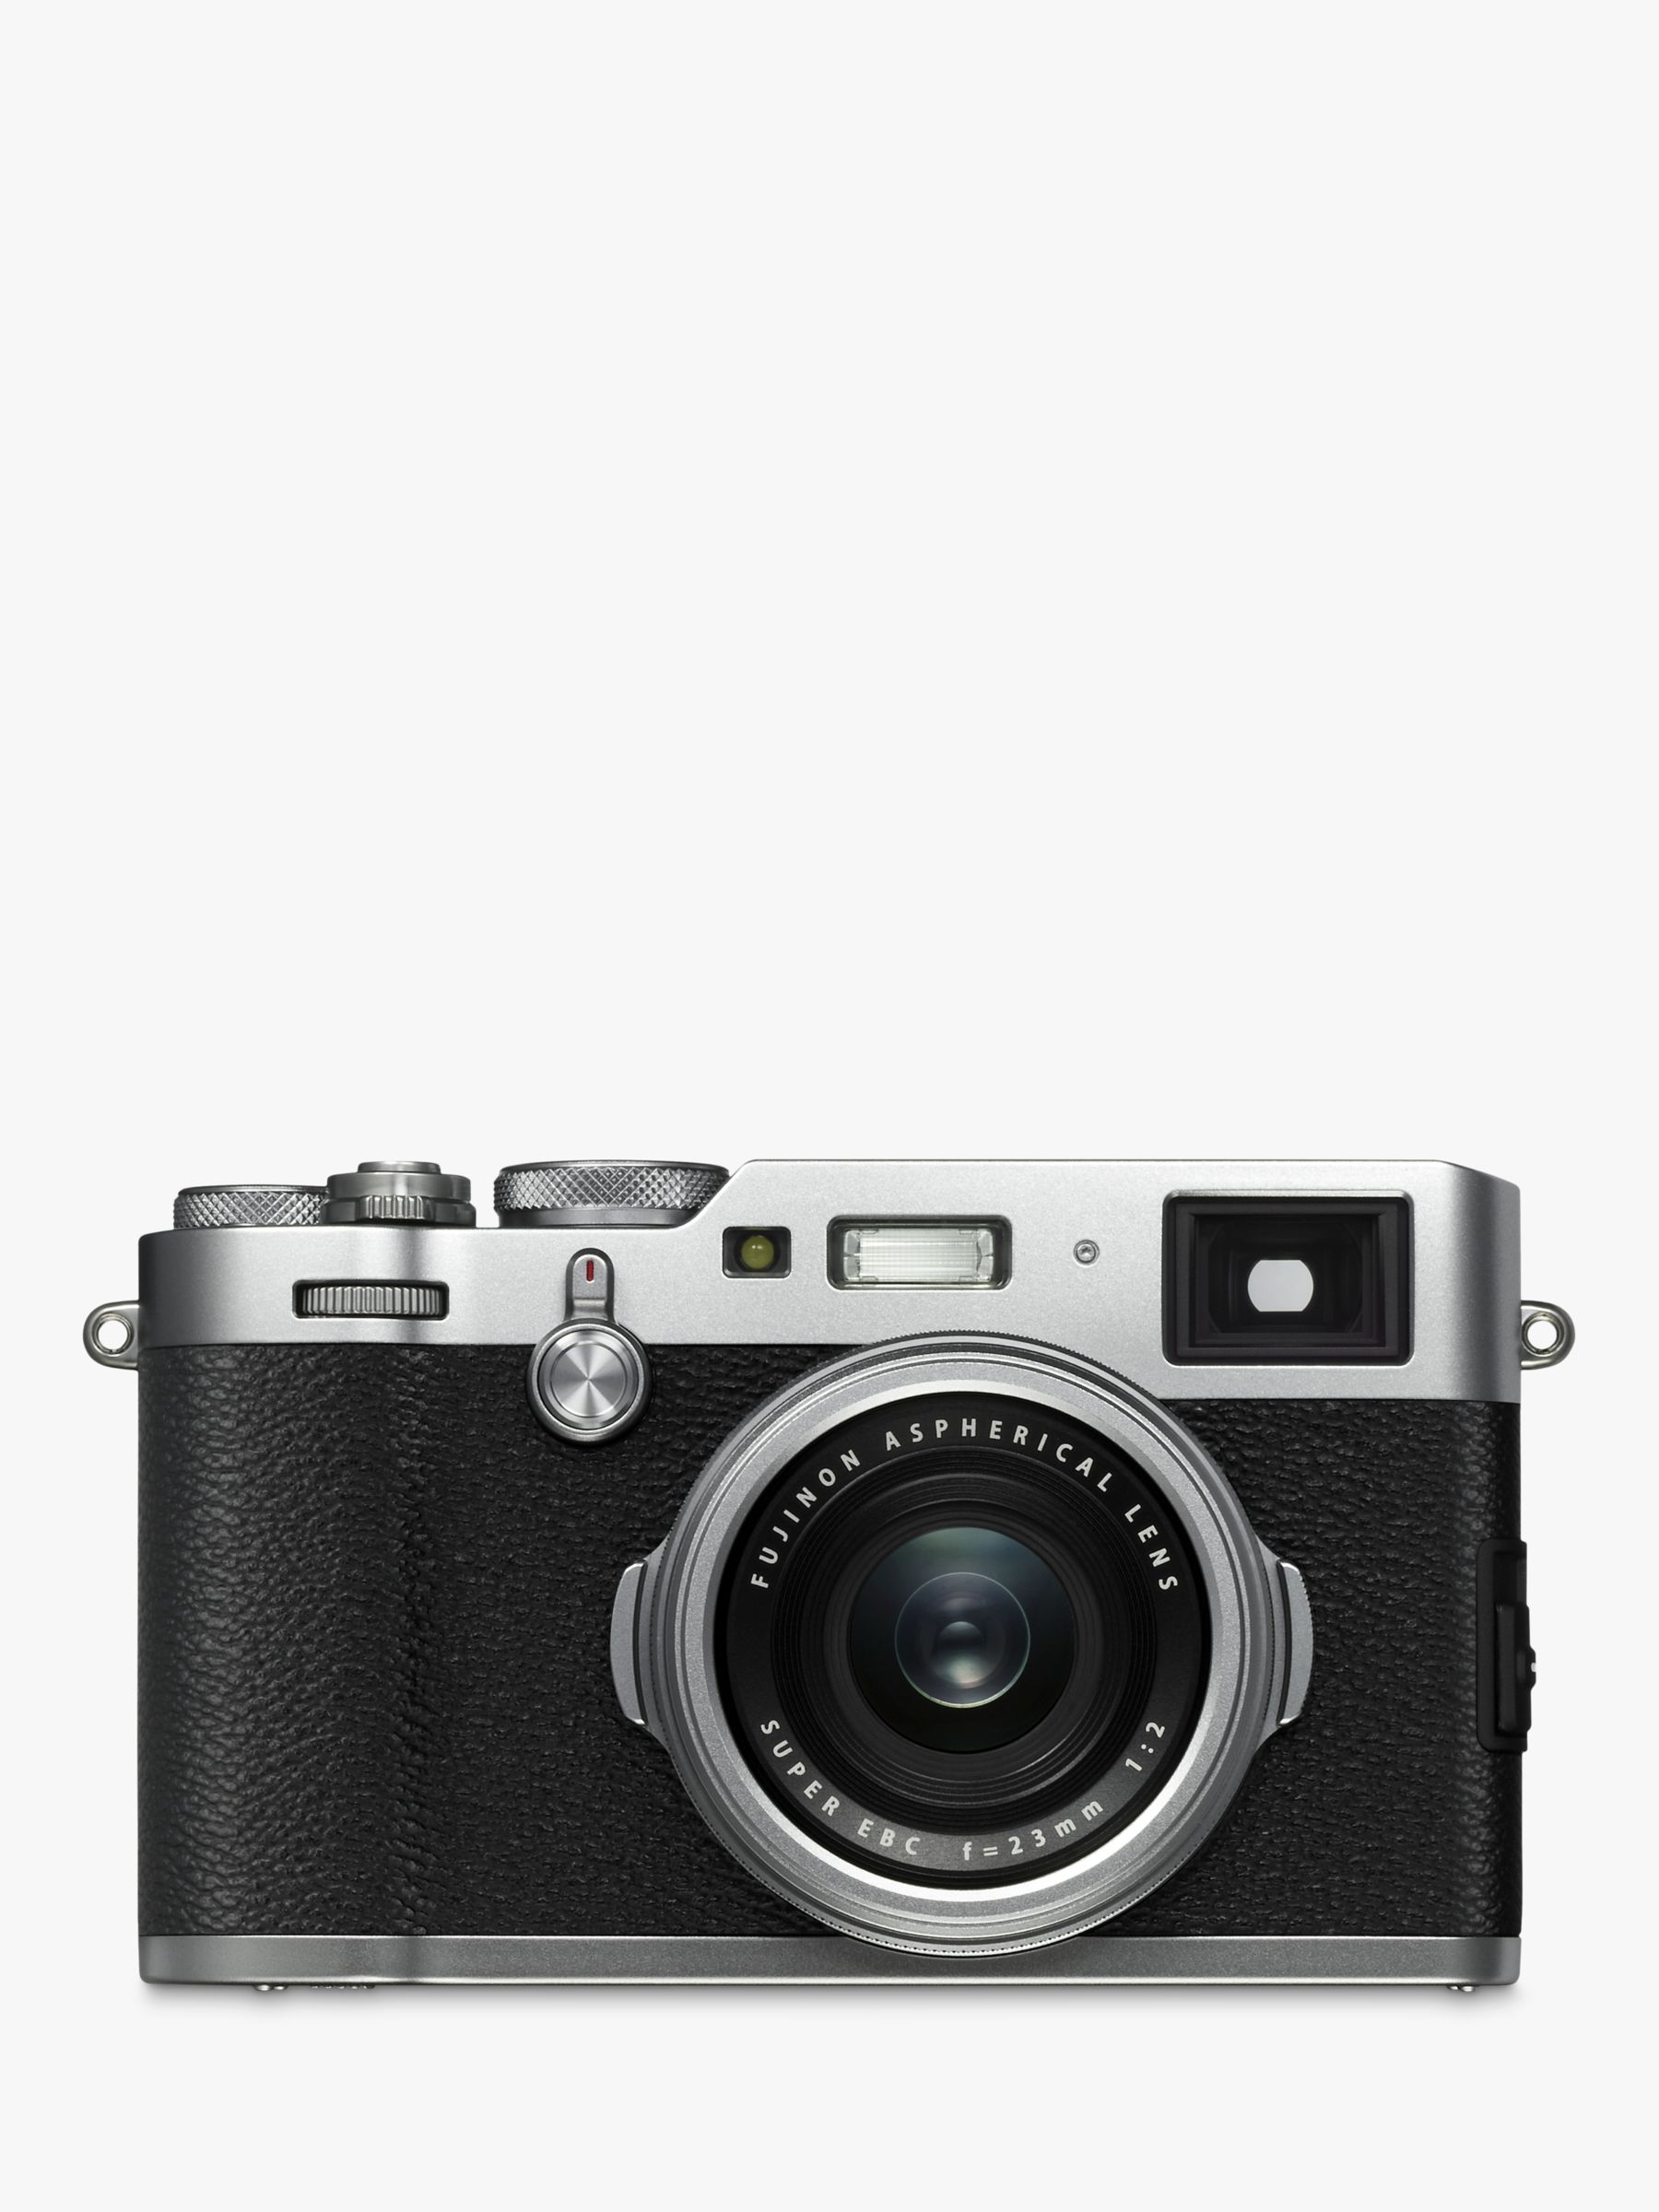 Fujifilm X100F Digital Compact Camera with 23mm Lens, 1080p Full HD, 24.3MP, Wi-Fi, Hybrid EVF/OVF, 3 LCD Screen